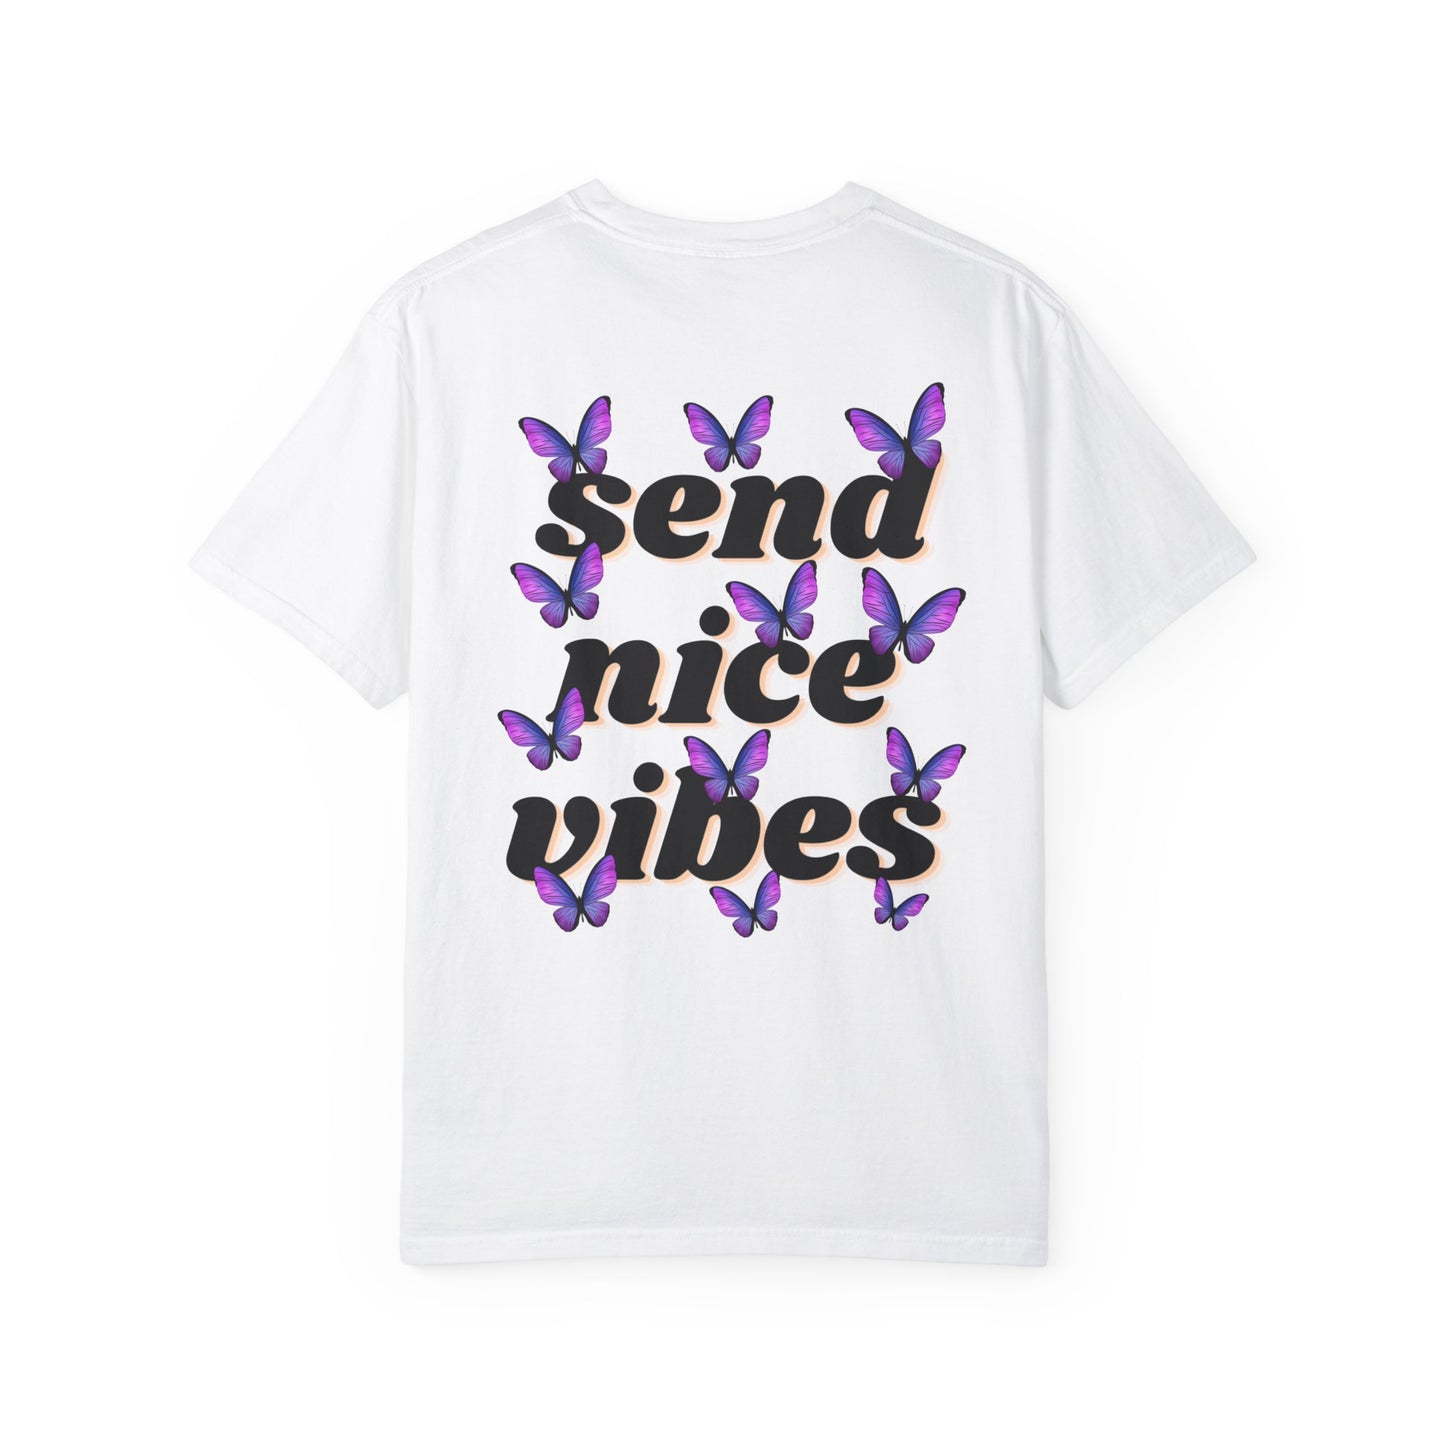 Send Nice Vibes T-shirt